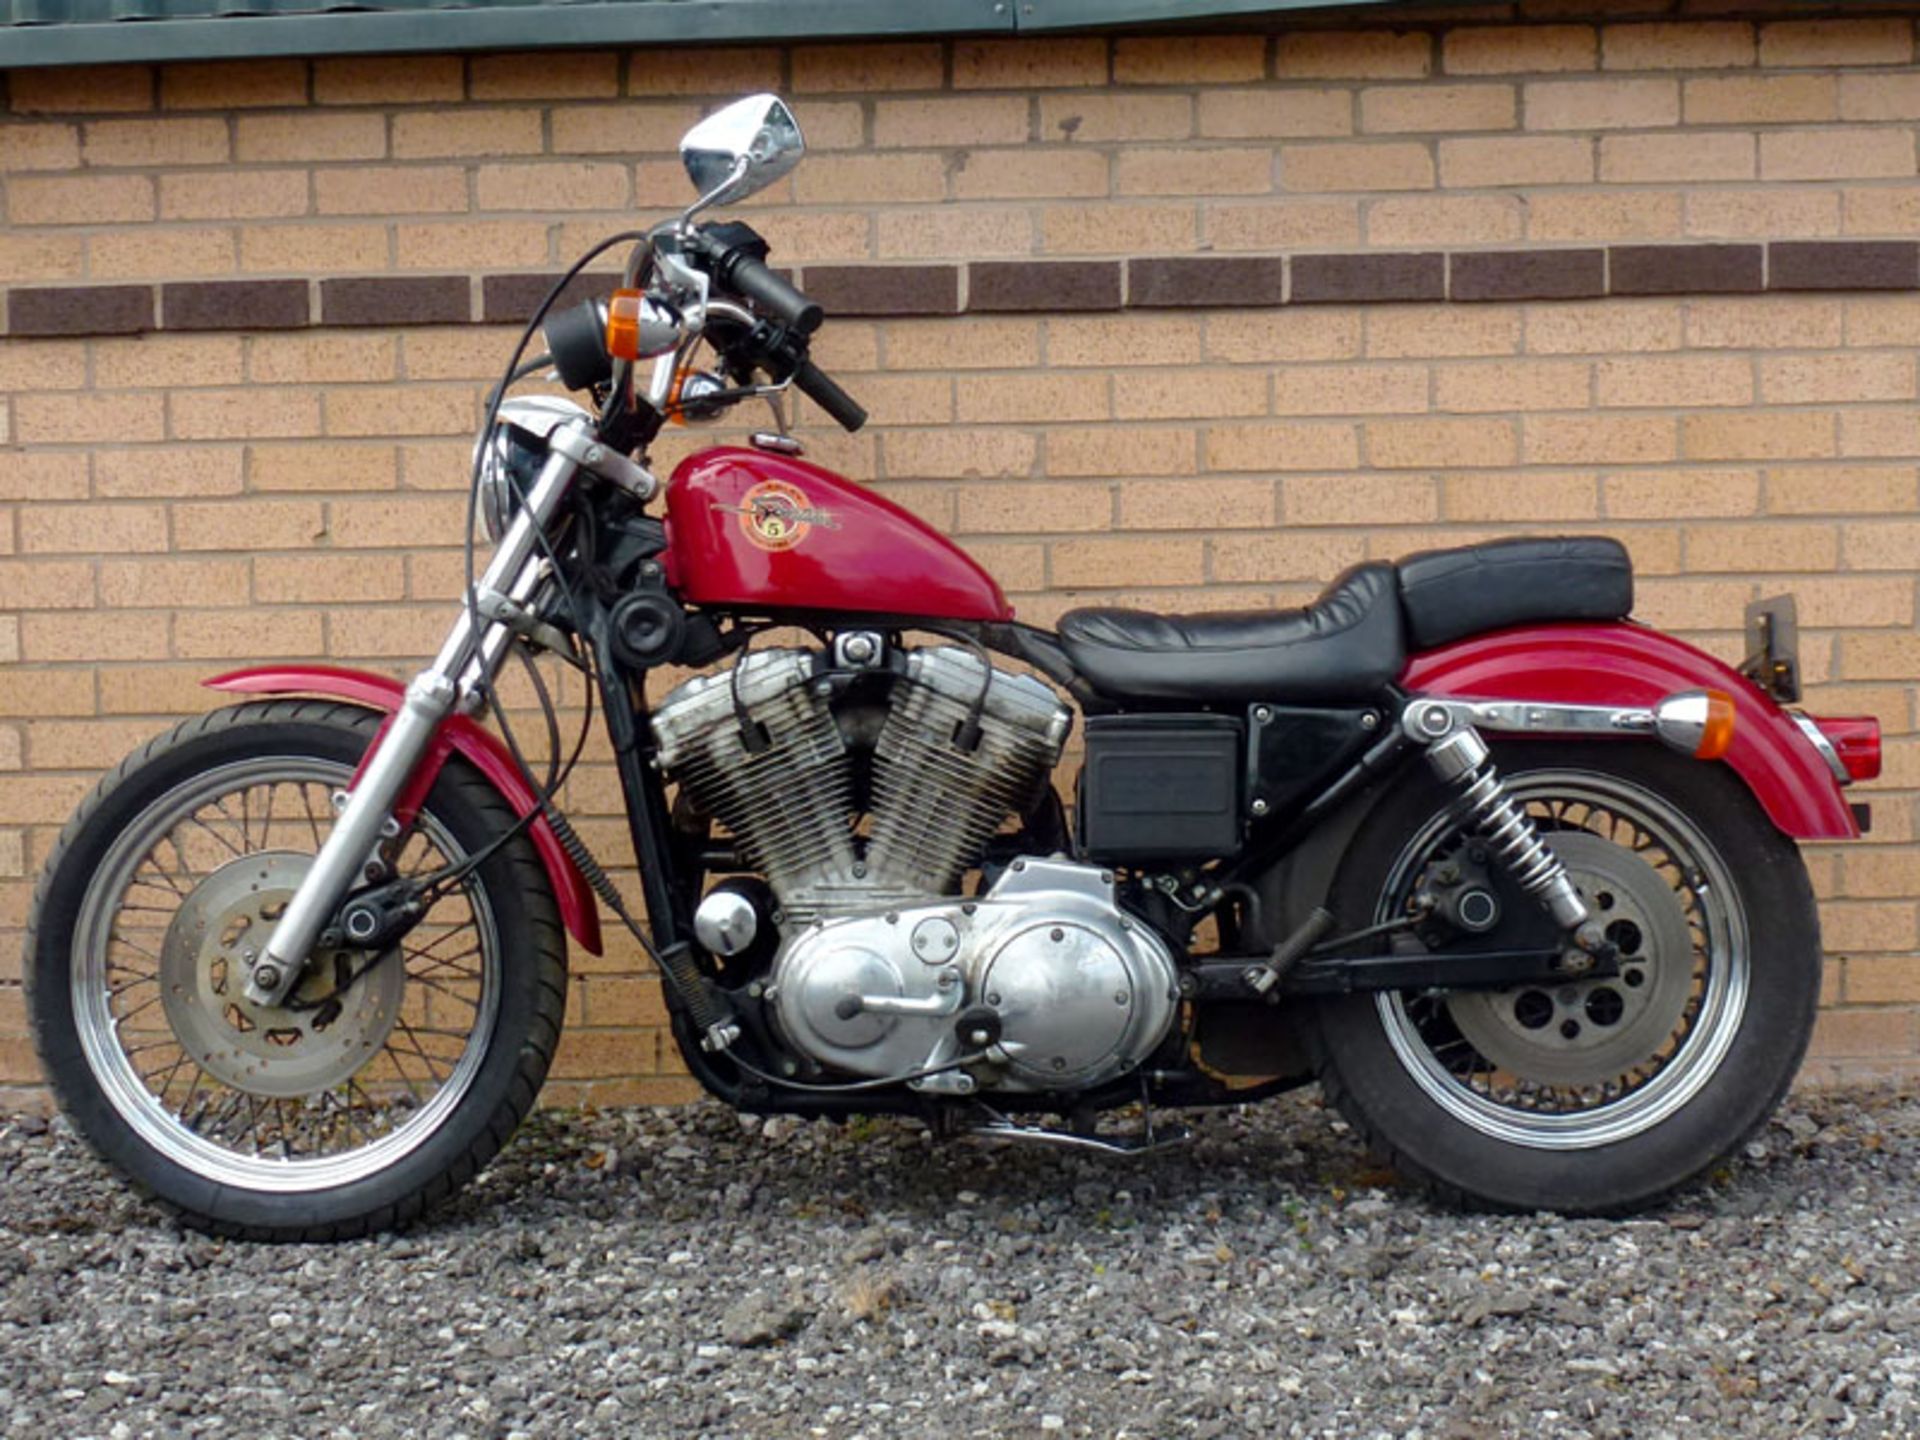 - Totally original bike

- Rare Hugger model

- 883cc Evo engine

- Same owner for 15 years

- Great - Image 2 of 7